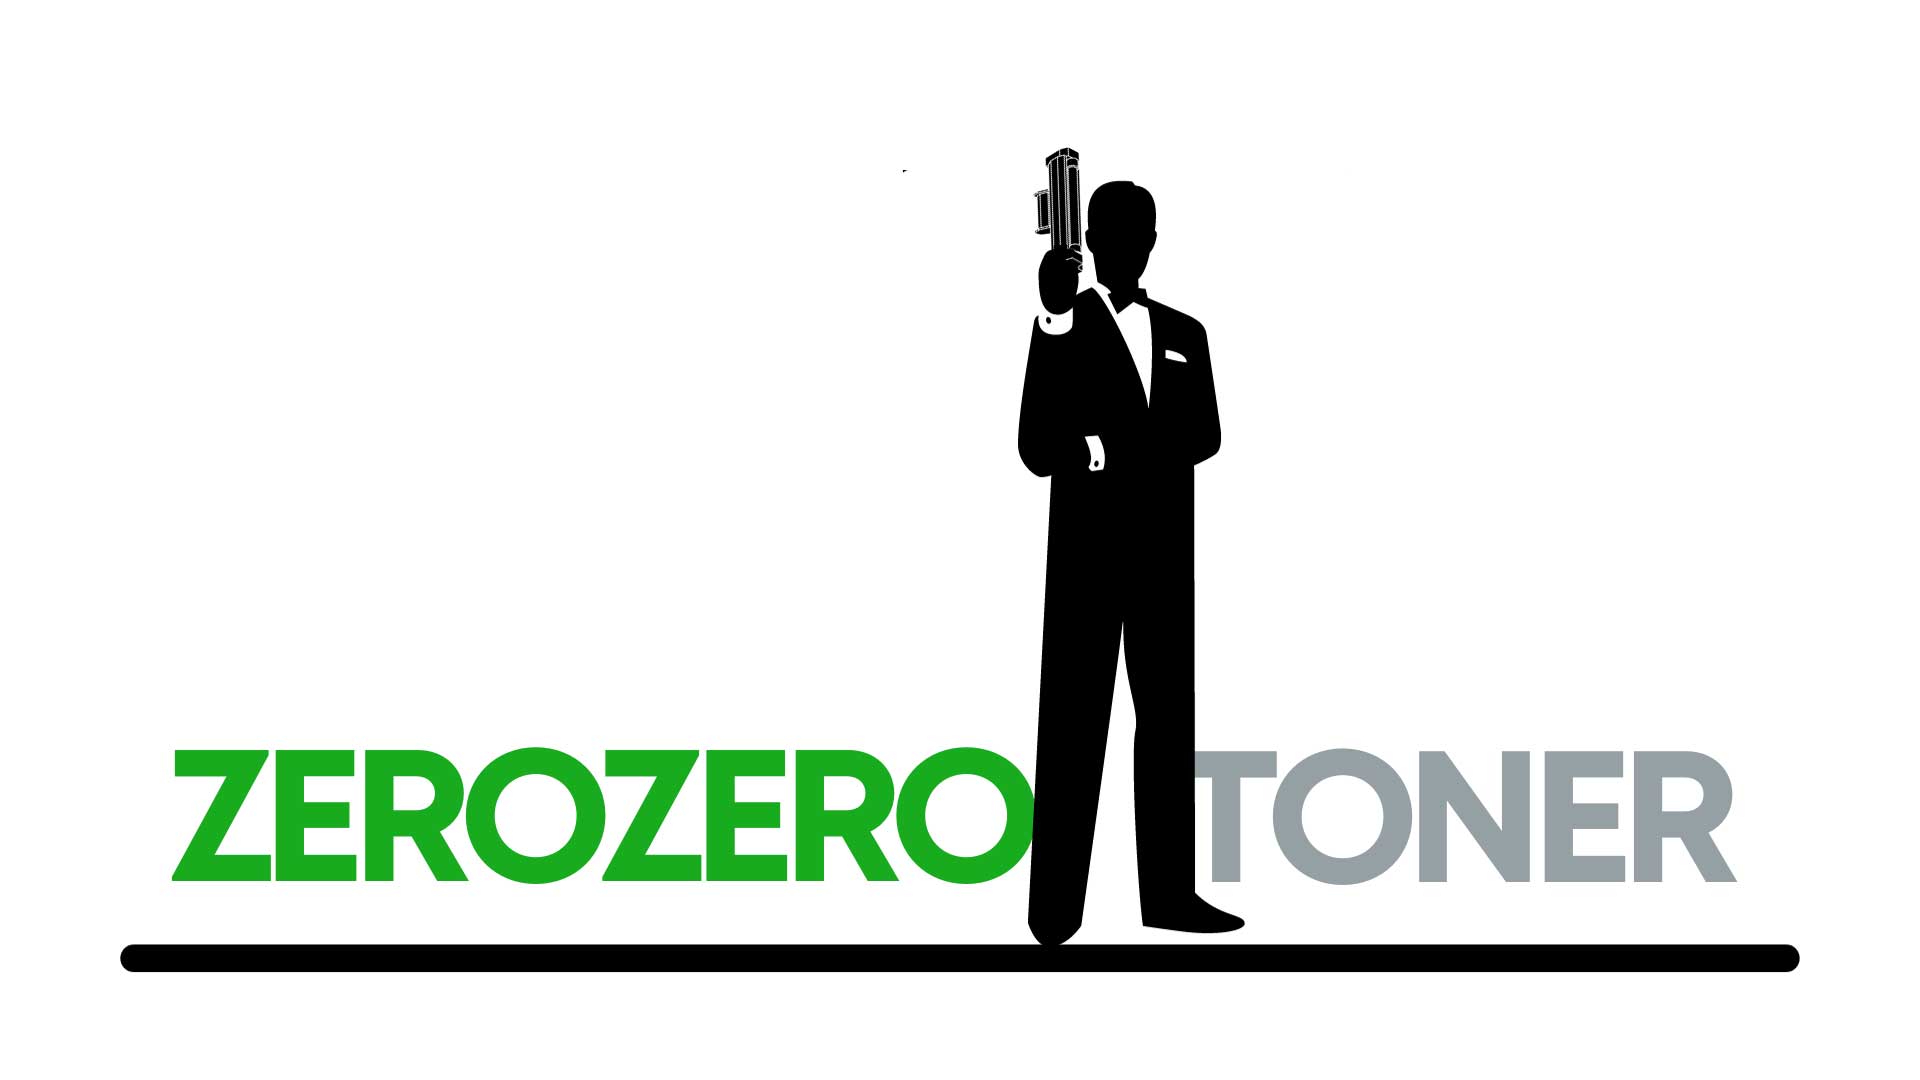 Zerozero toner